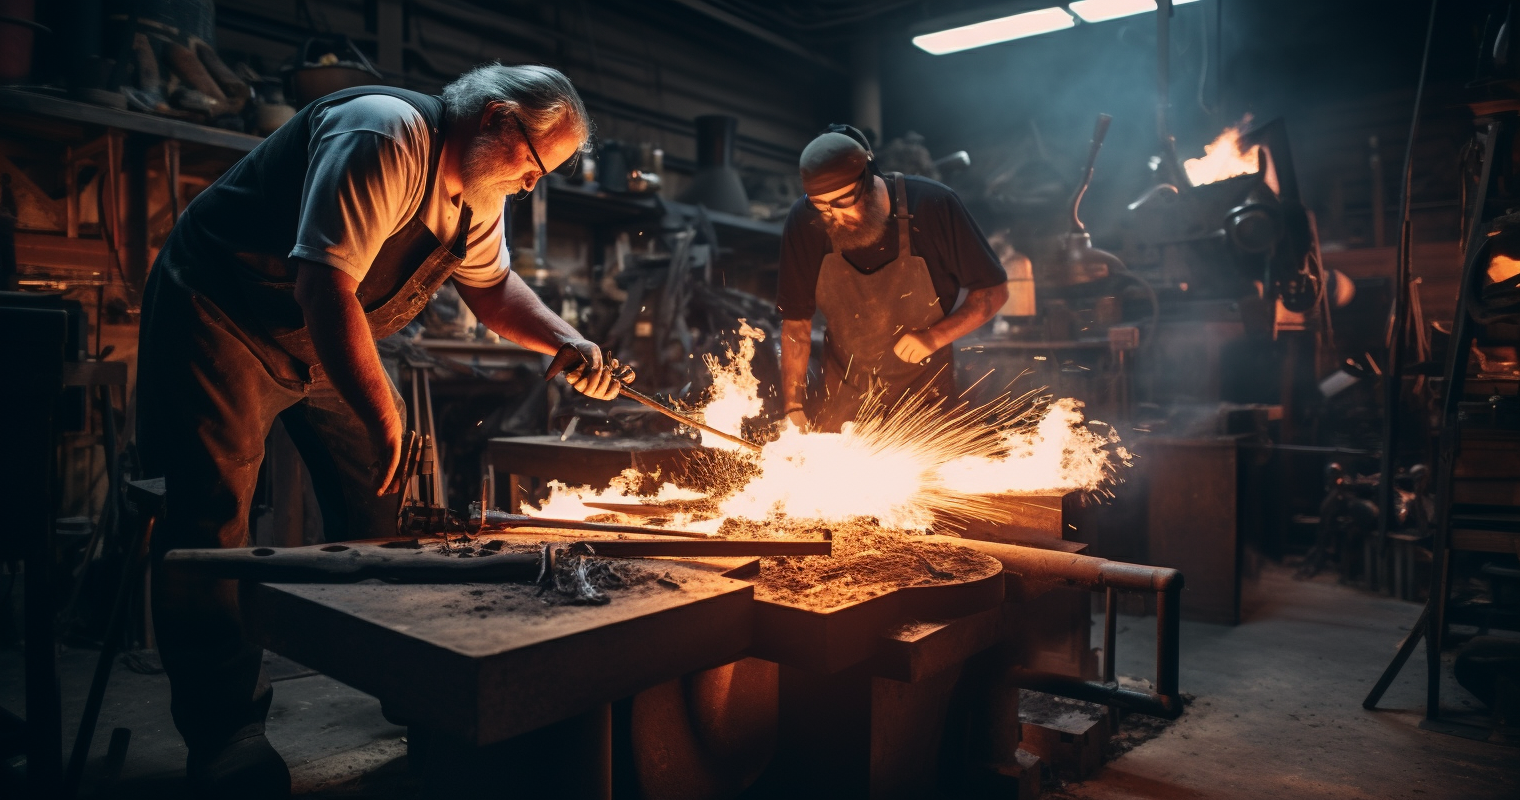 The Blacksmith's Craftsmanship